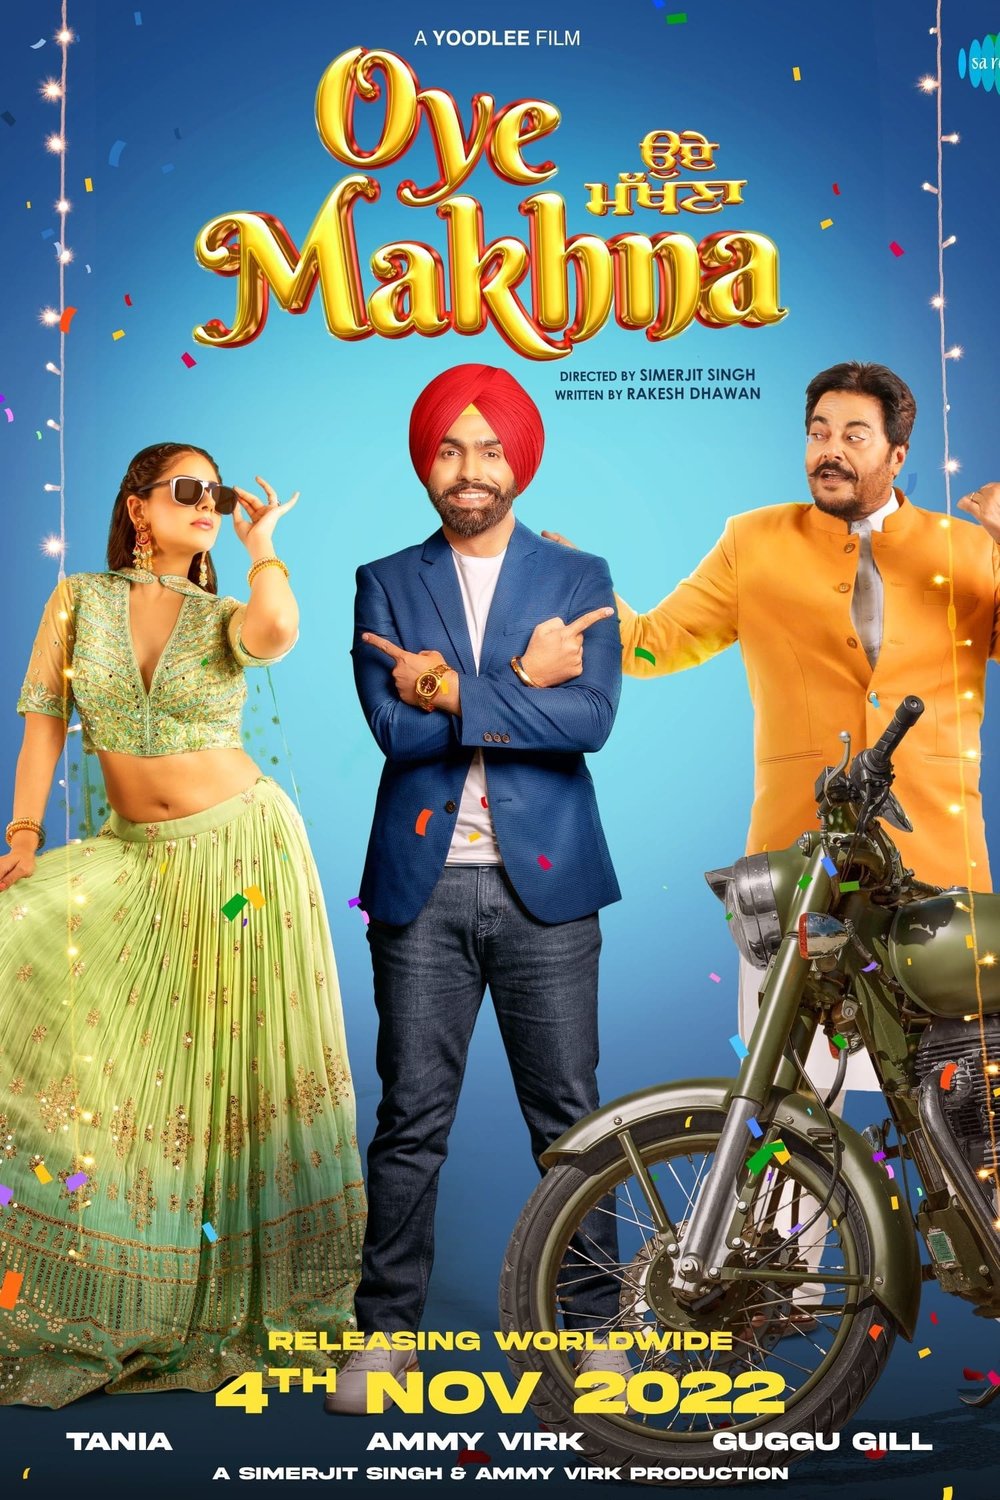 Punjabi poster of the movie Oye Makhna